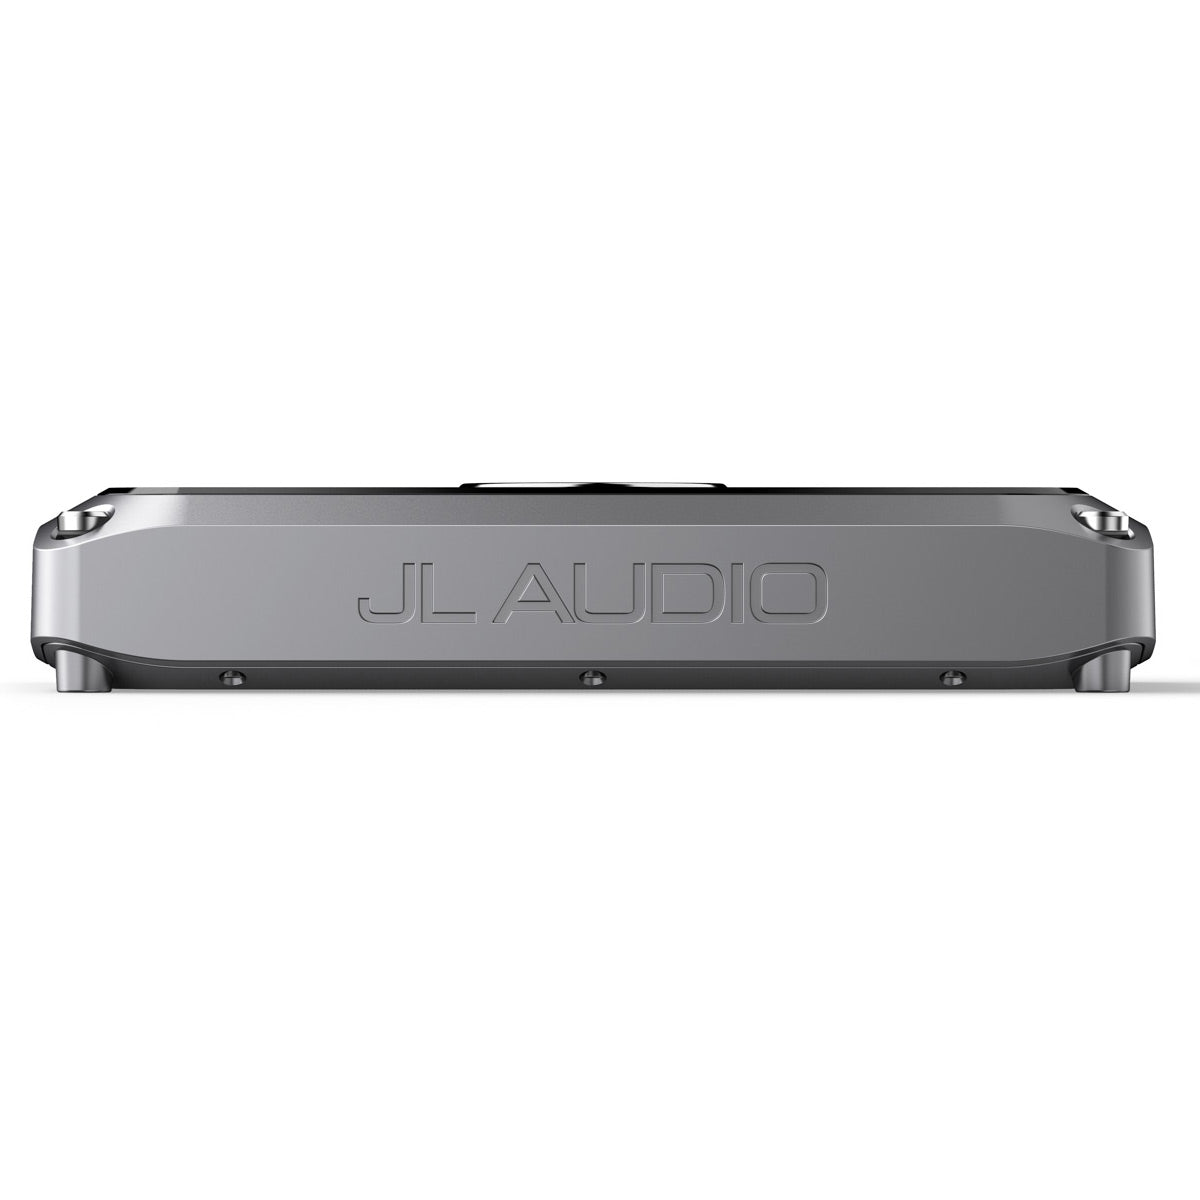 JL Audio VX1000/1i 1000 Watts x 1 at 2 Ohms Monoblock Subwoofer Amplifier w/ DSP